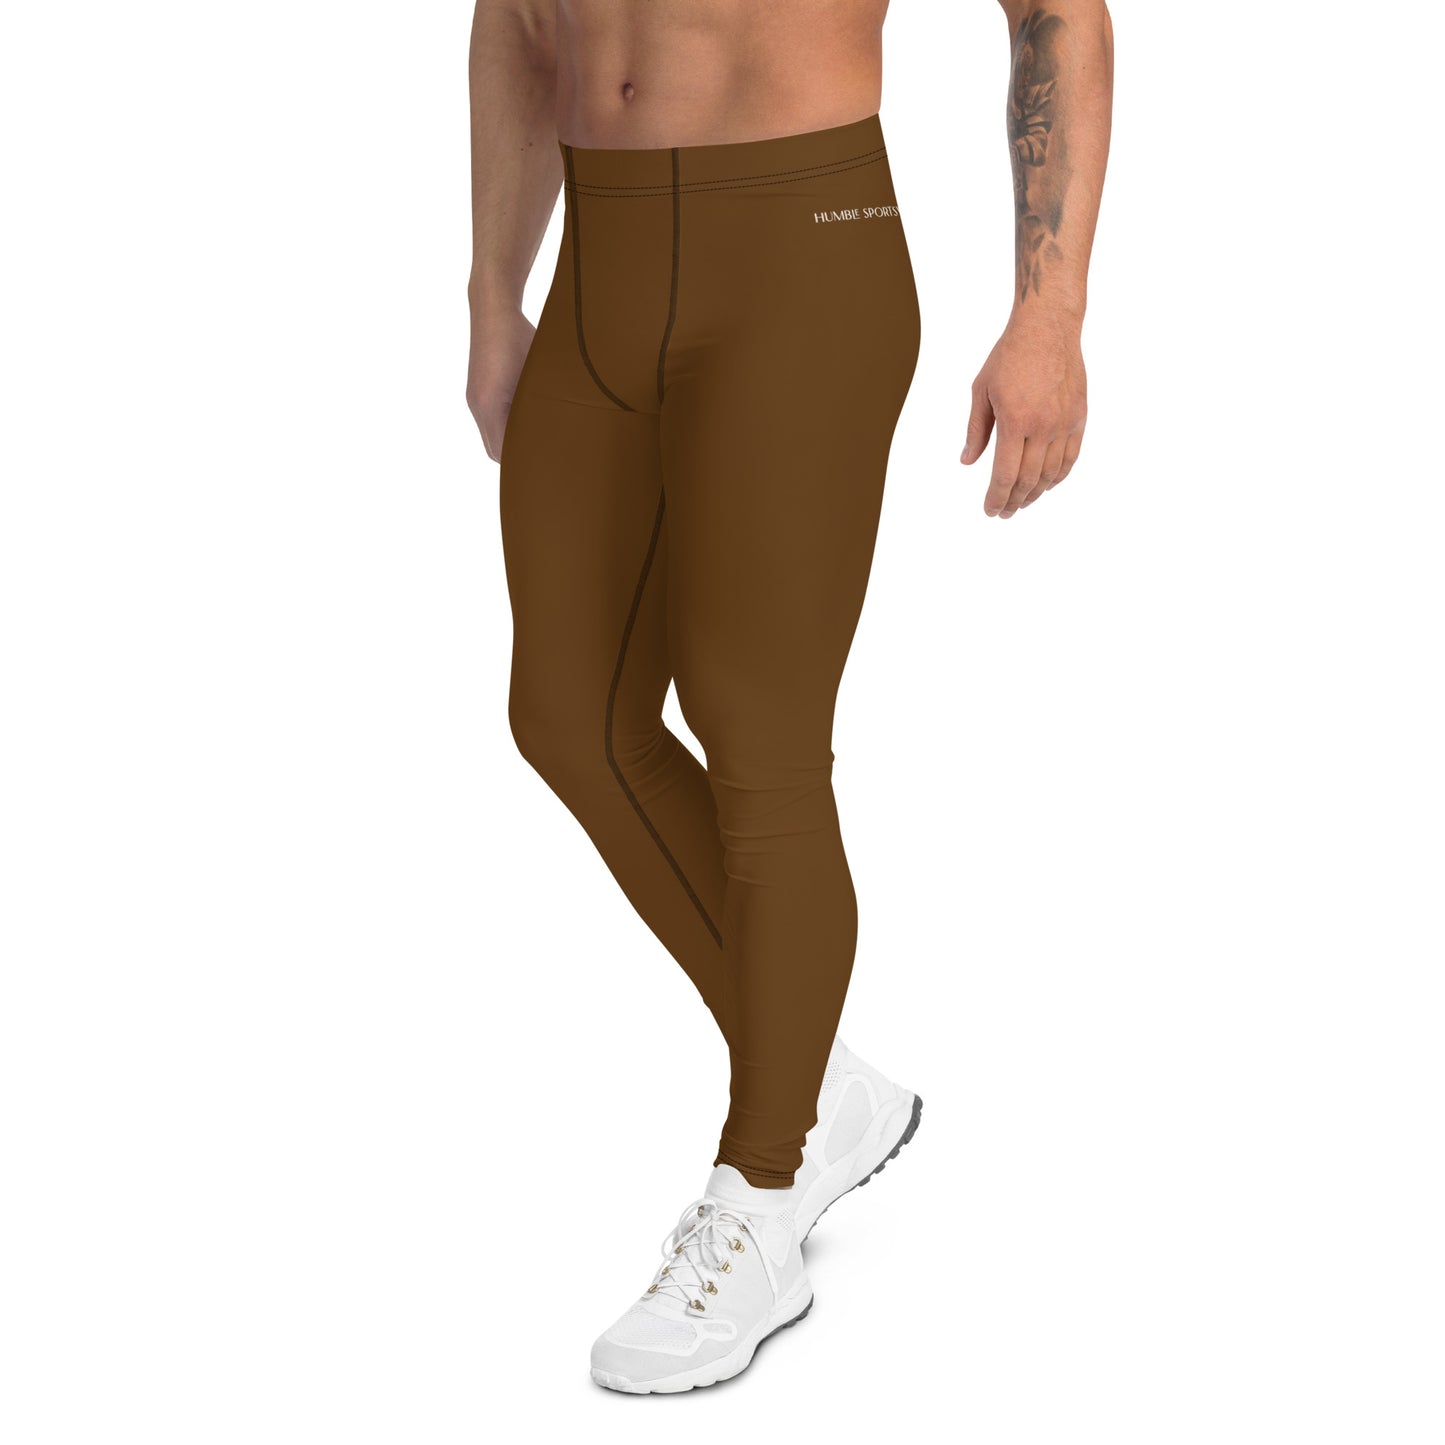 Humble Sportswear, Men's color match activewear leggings, men's brown activewear workout leggings, men's activewear  